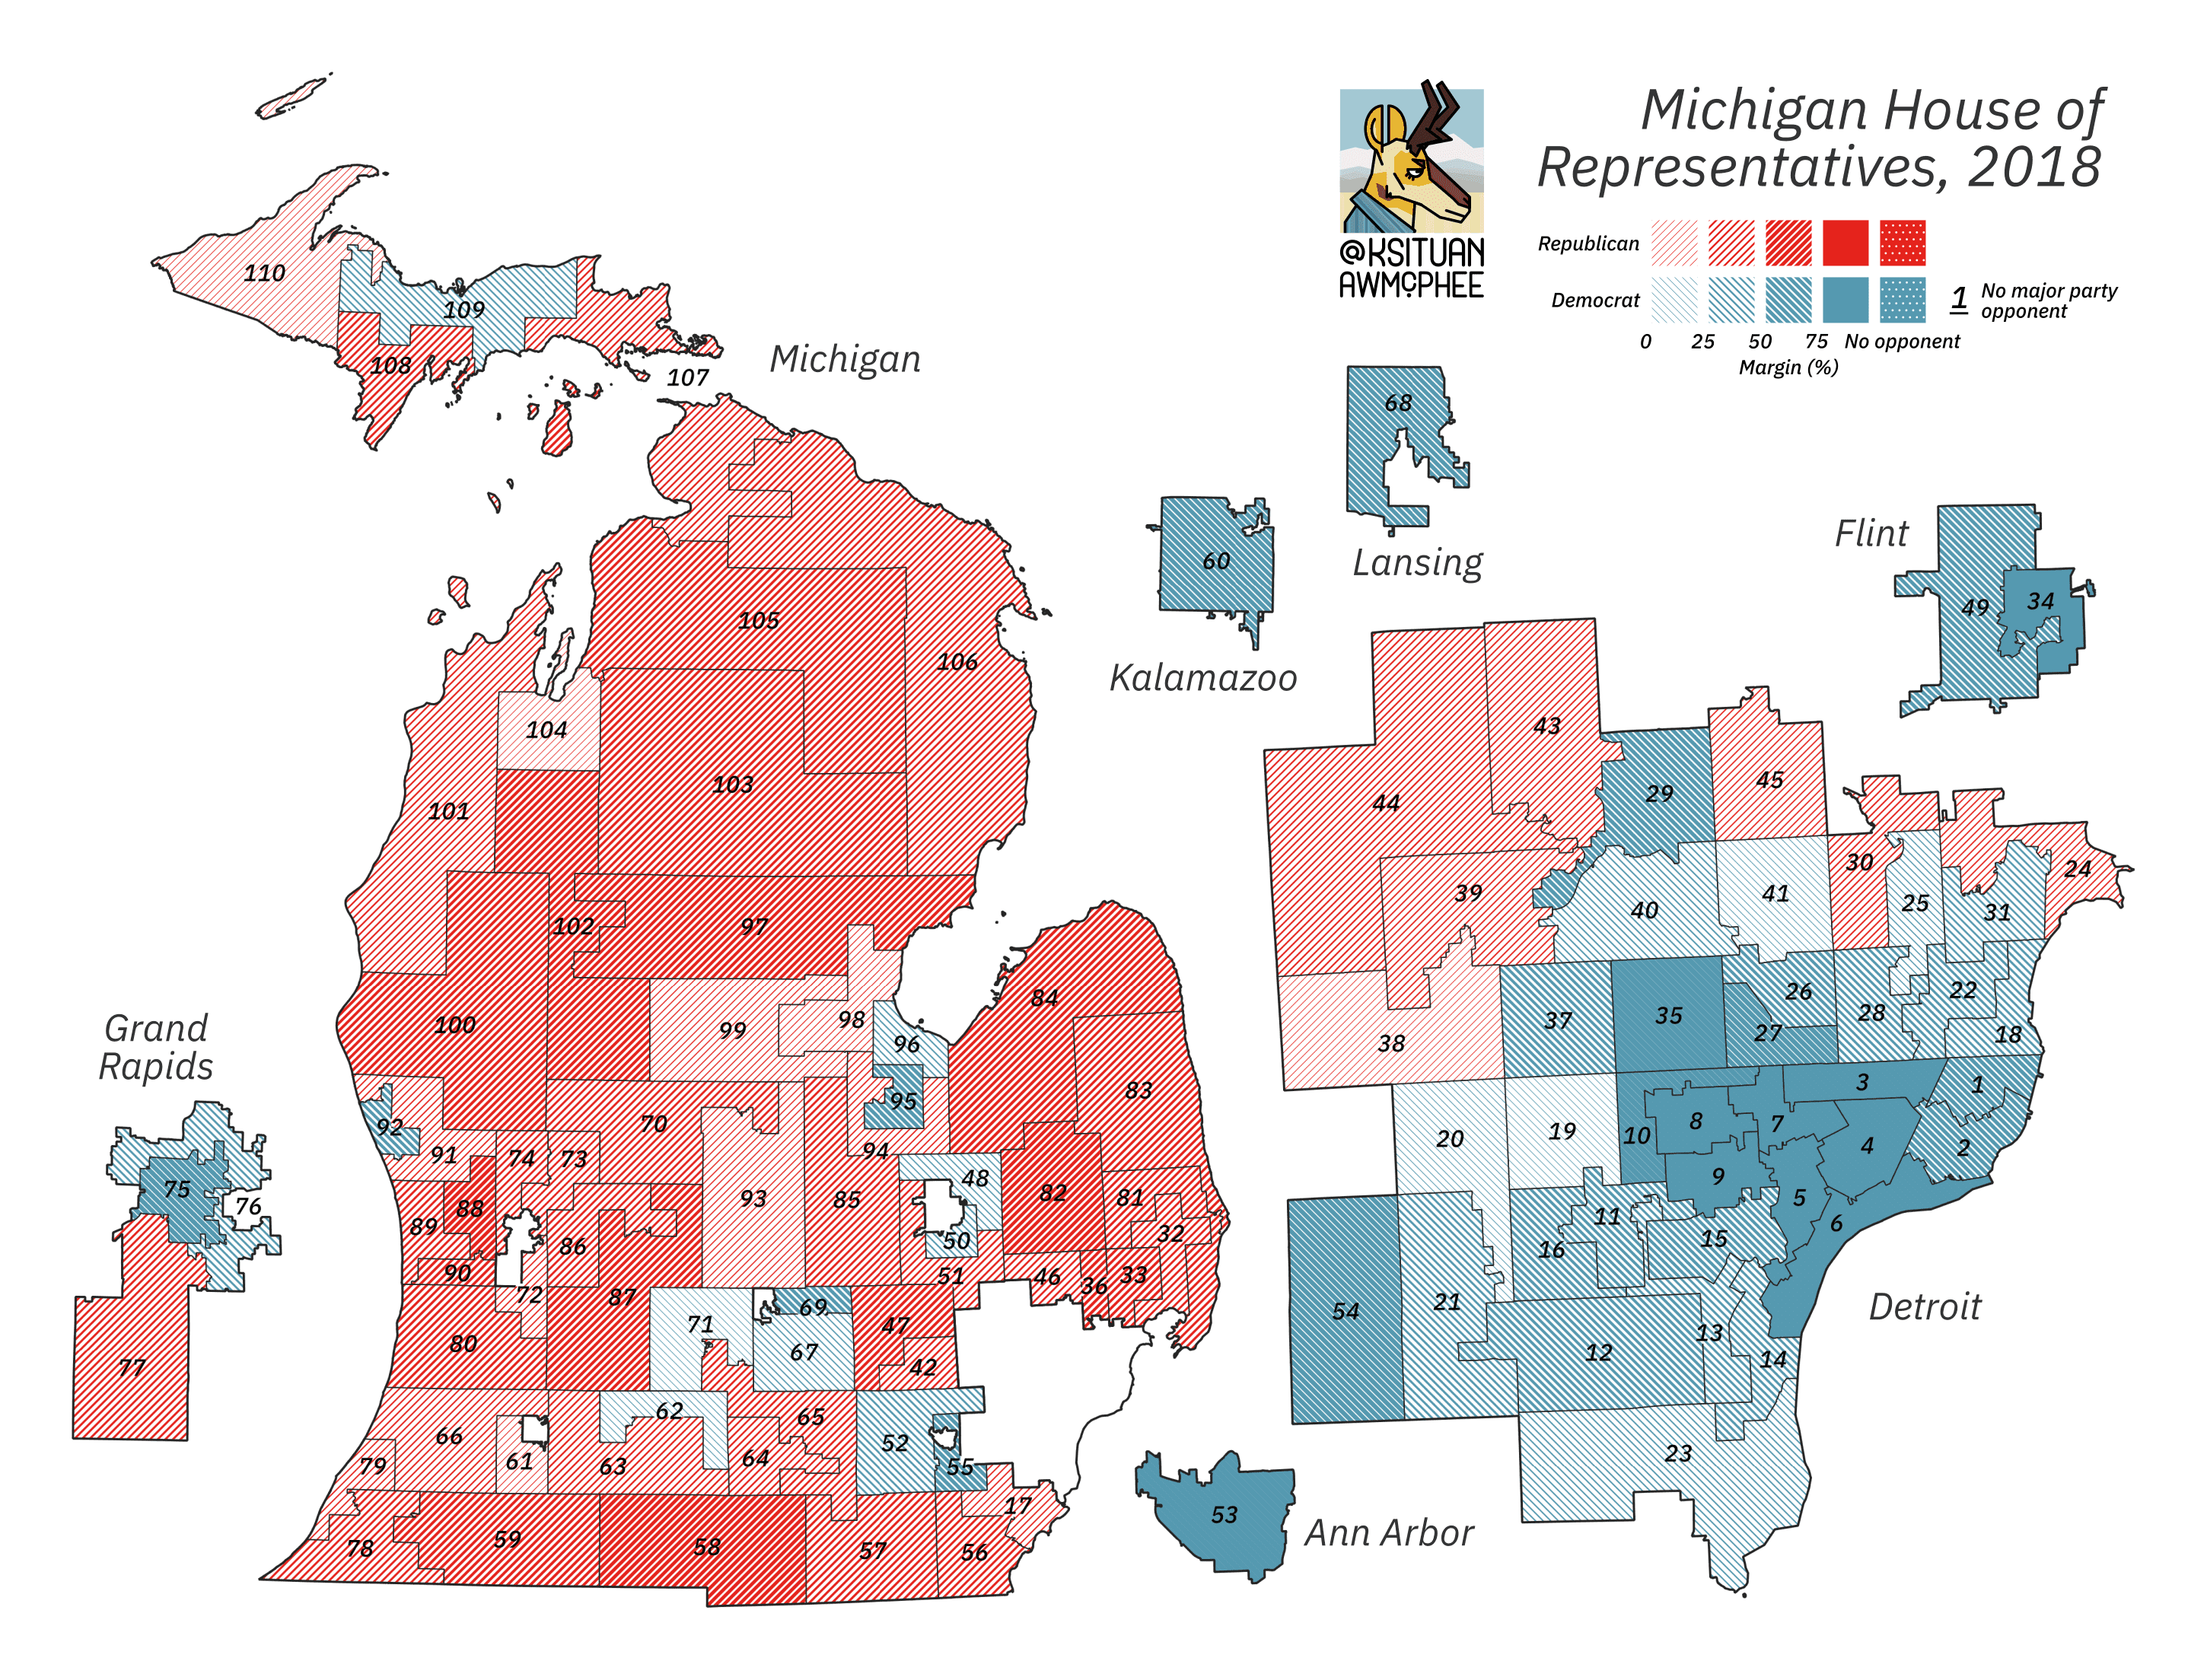 A political map of Michigan.